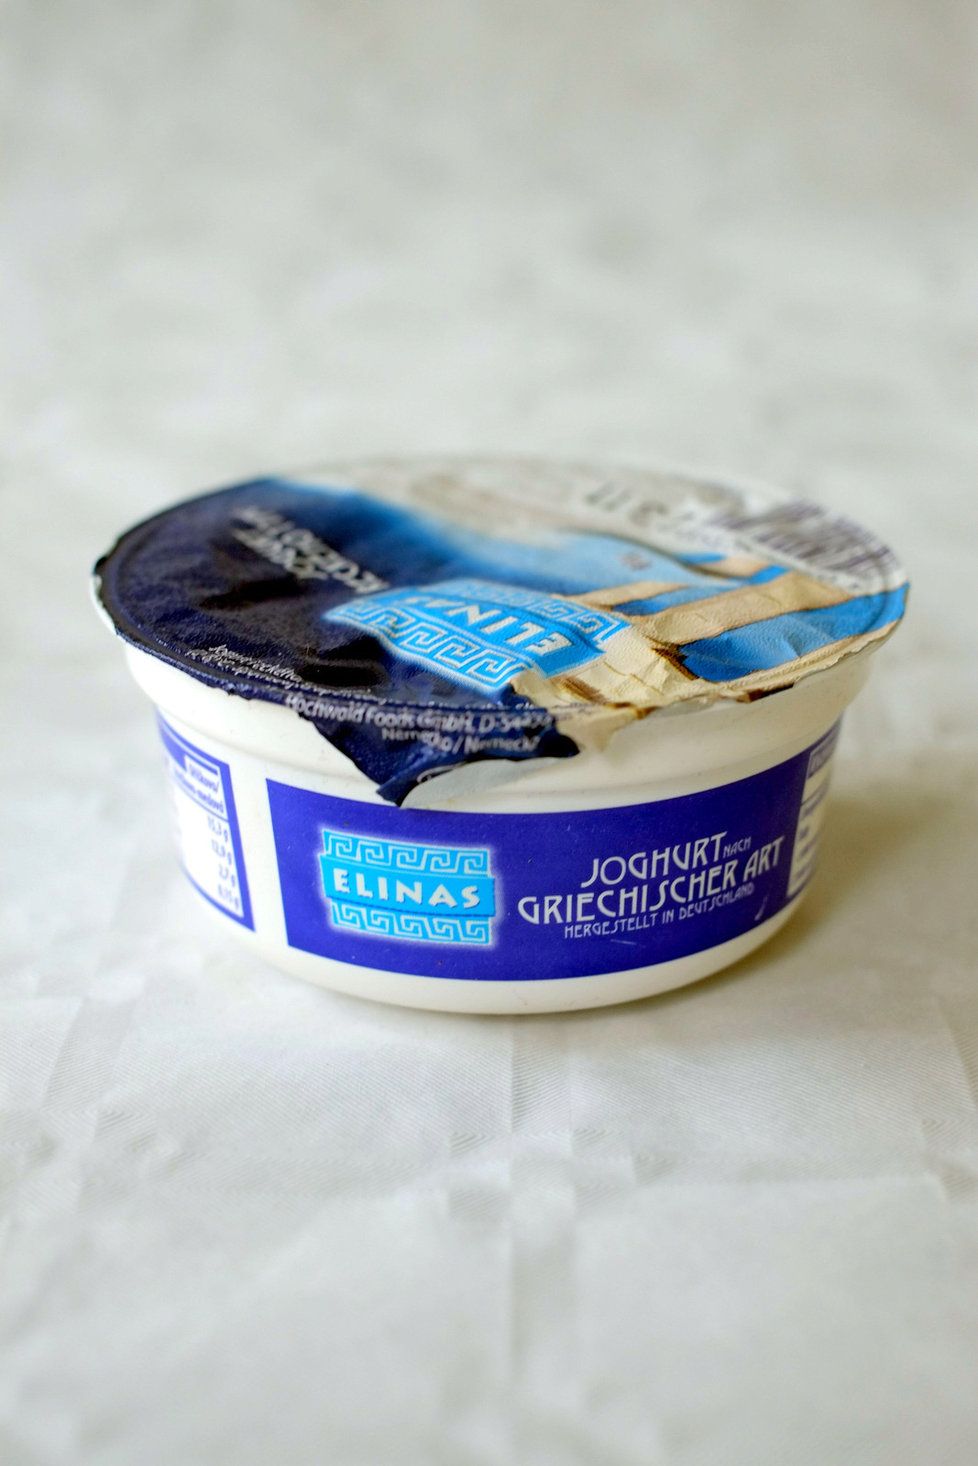 Elinas jogurt řeckého typu, skoro deset procent tuků, 4 gramy tuku ne sto gramech výrobku